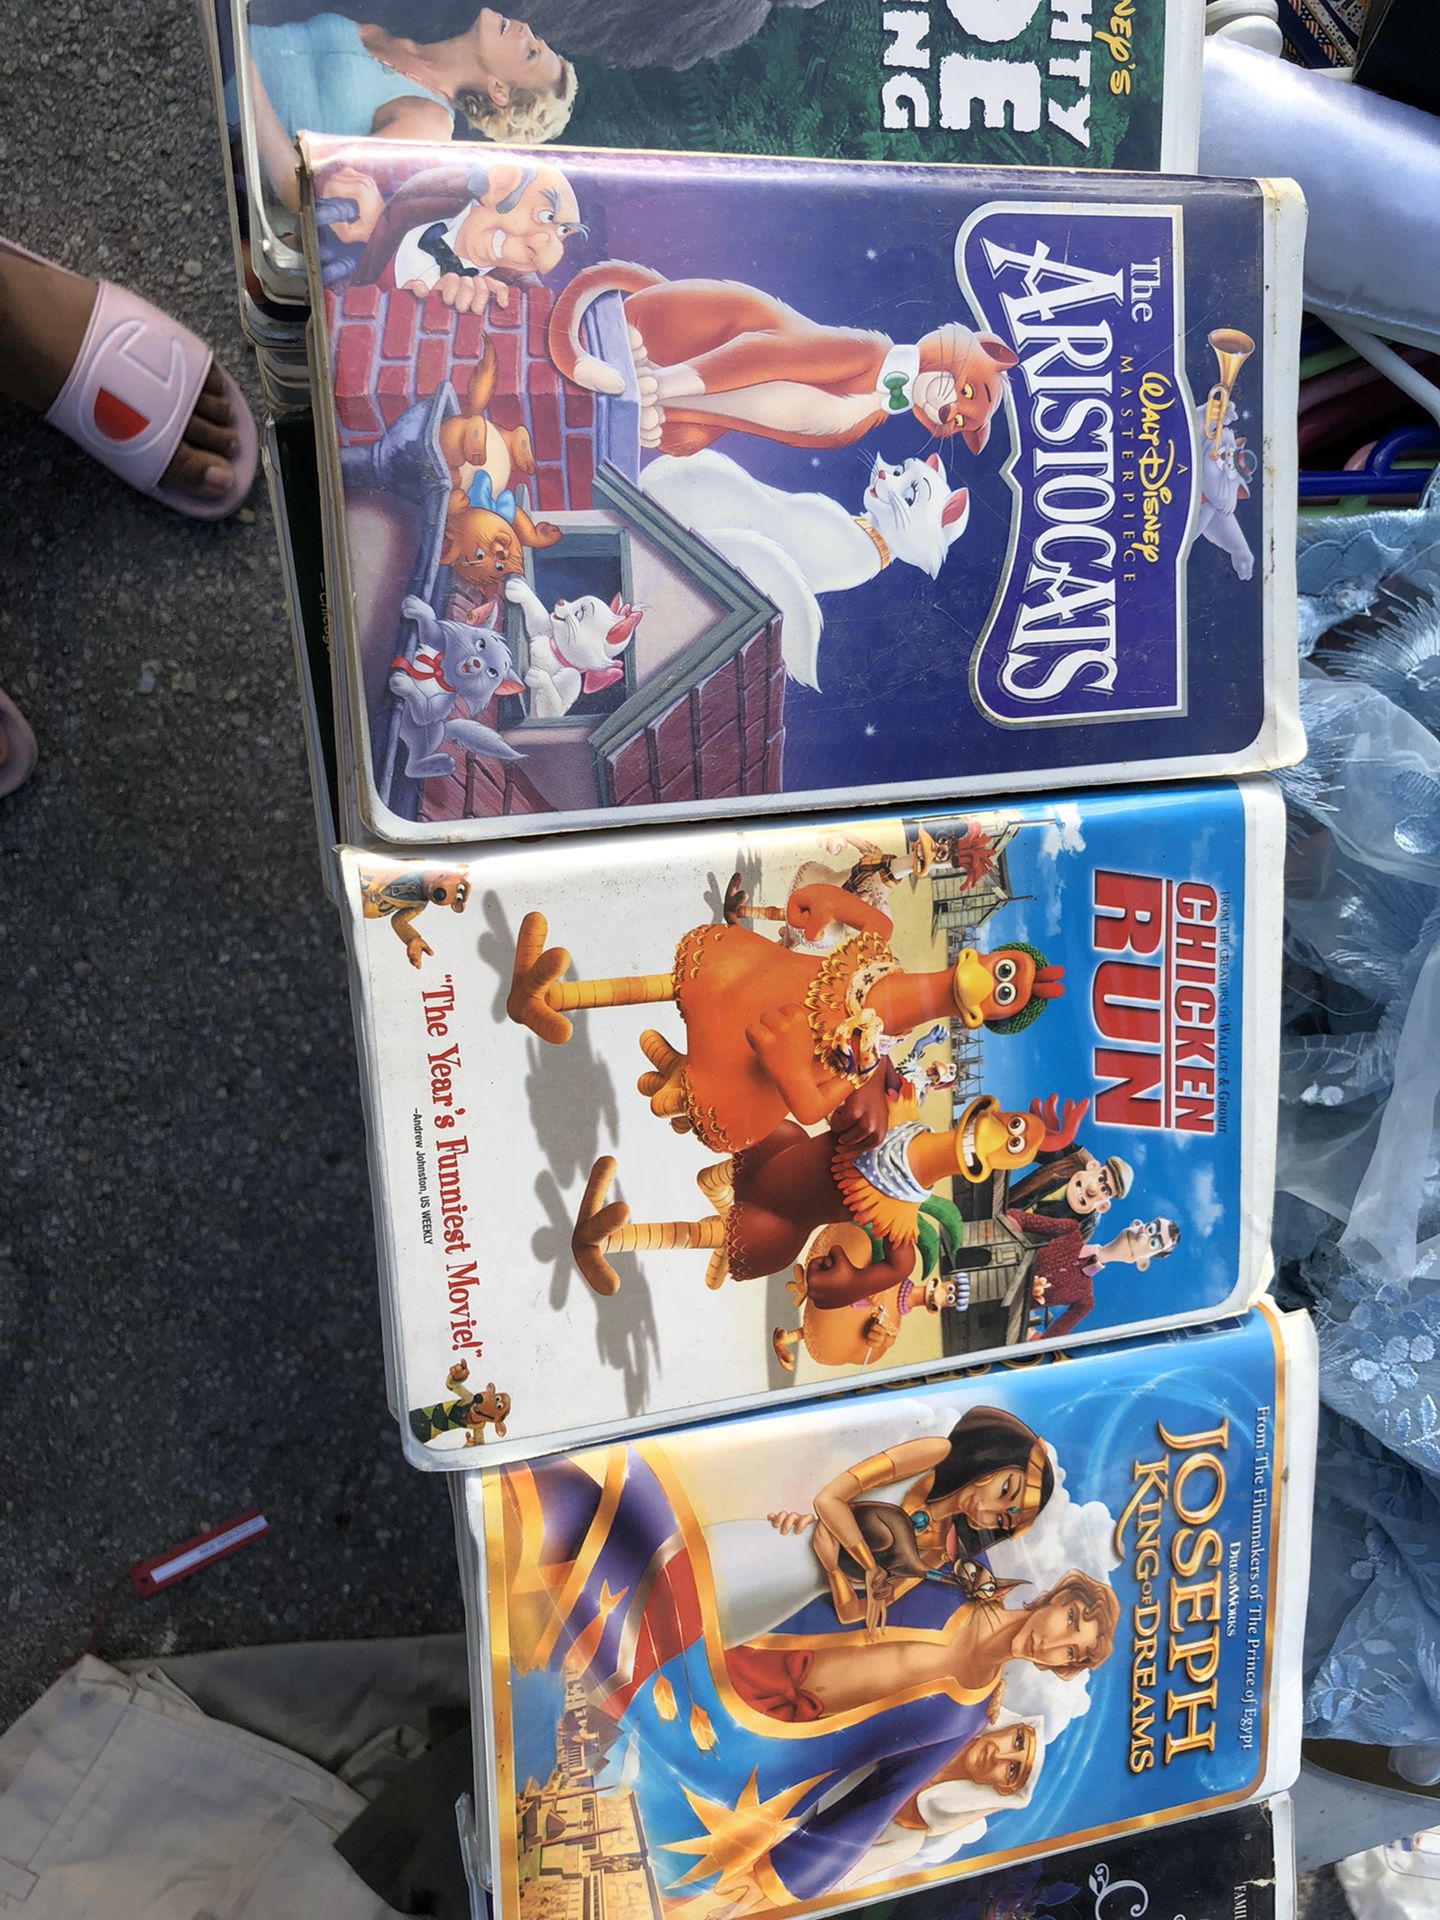 Classic Disney VCR’s